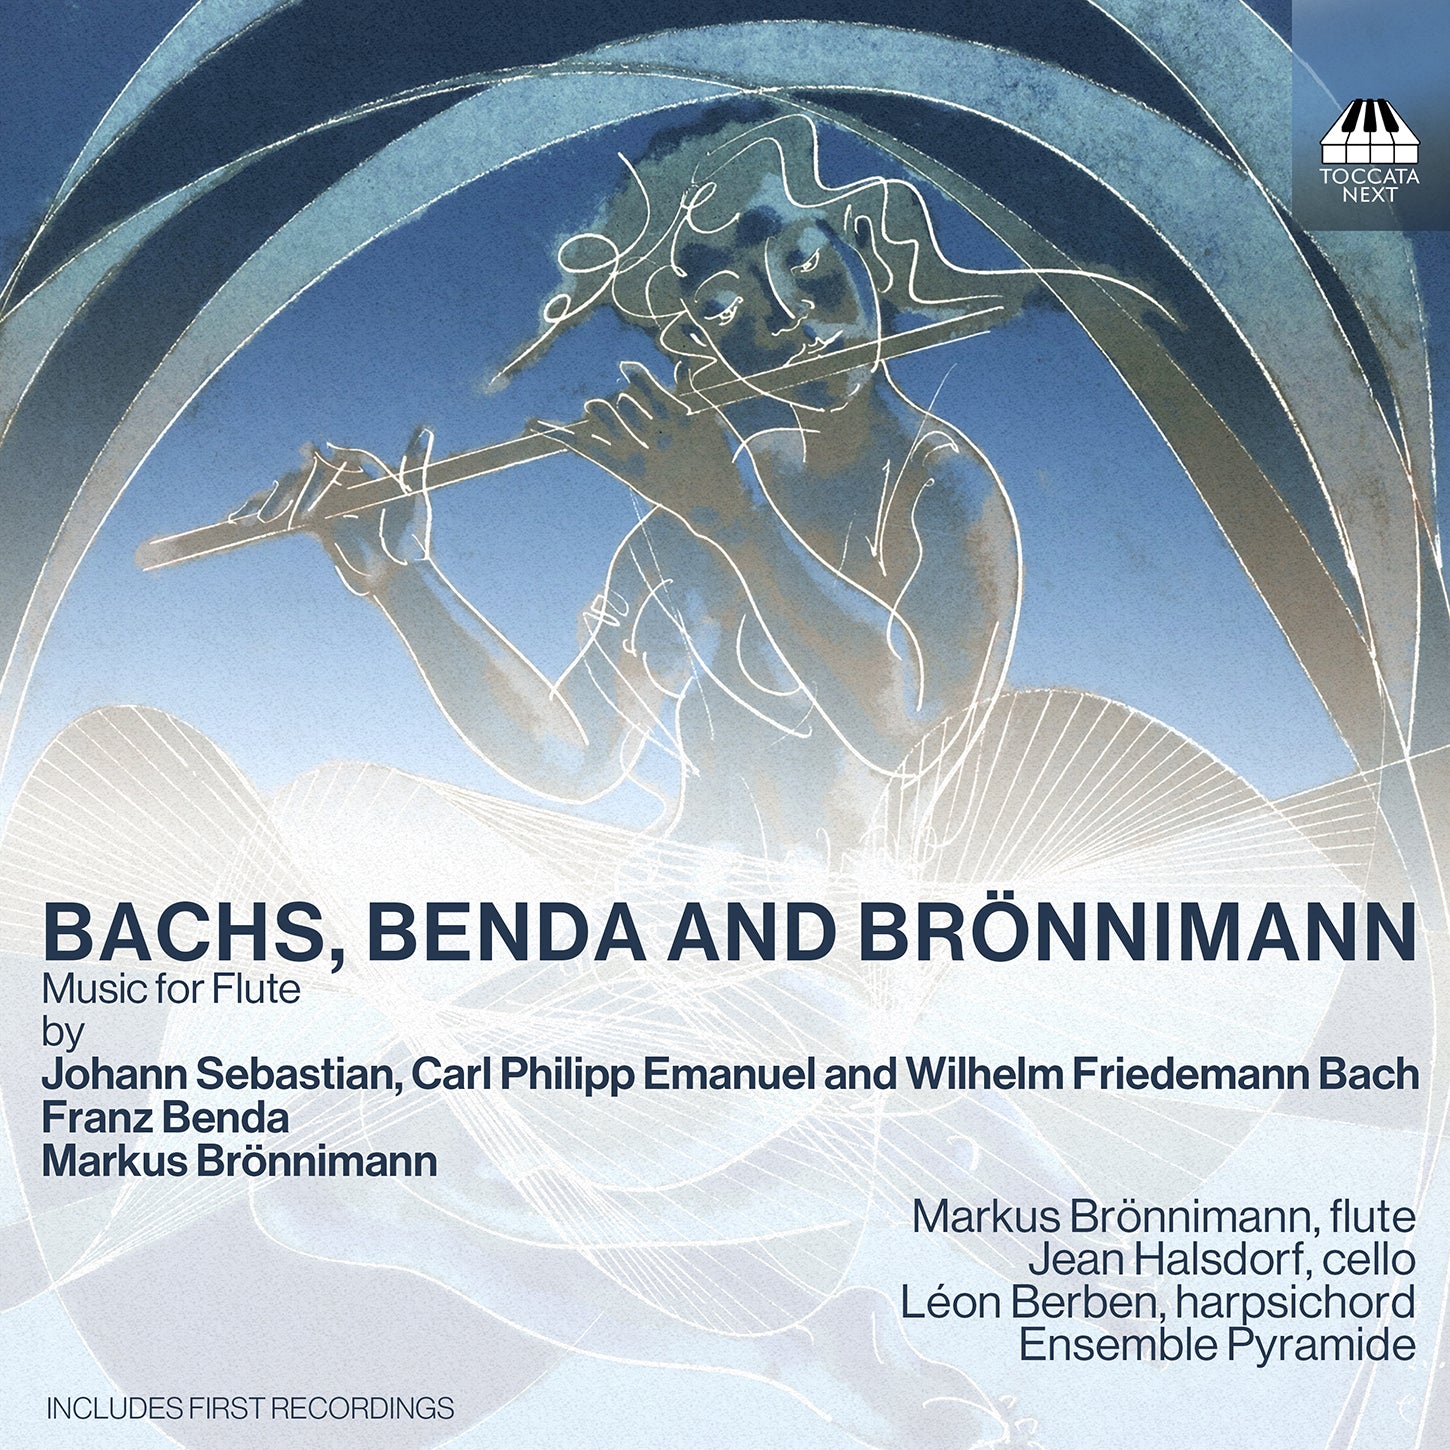 J.S. Bach, C.P.E. Bach, W.F. Bach, Benda & Bronnimann: Music for Flute